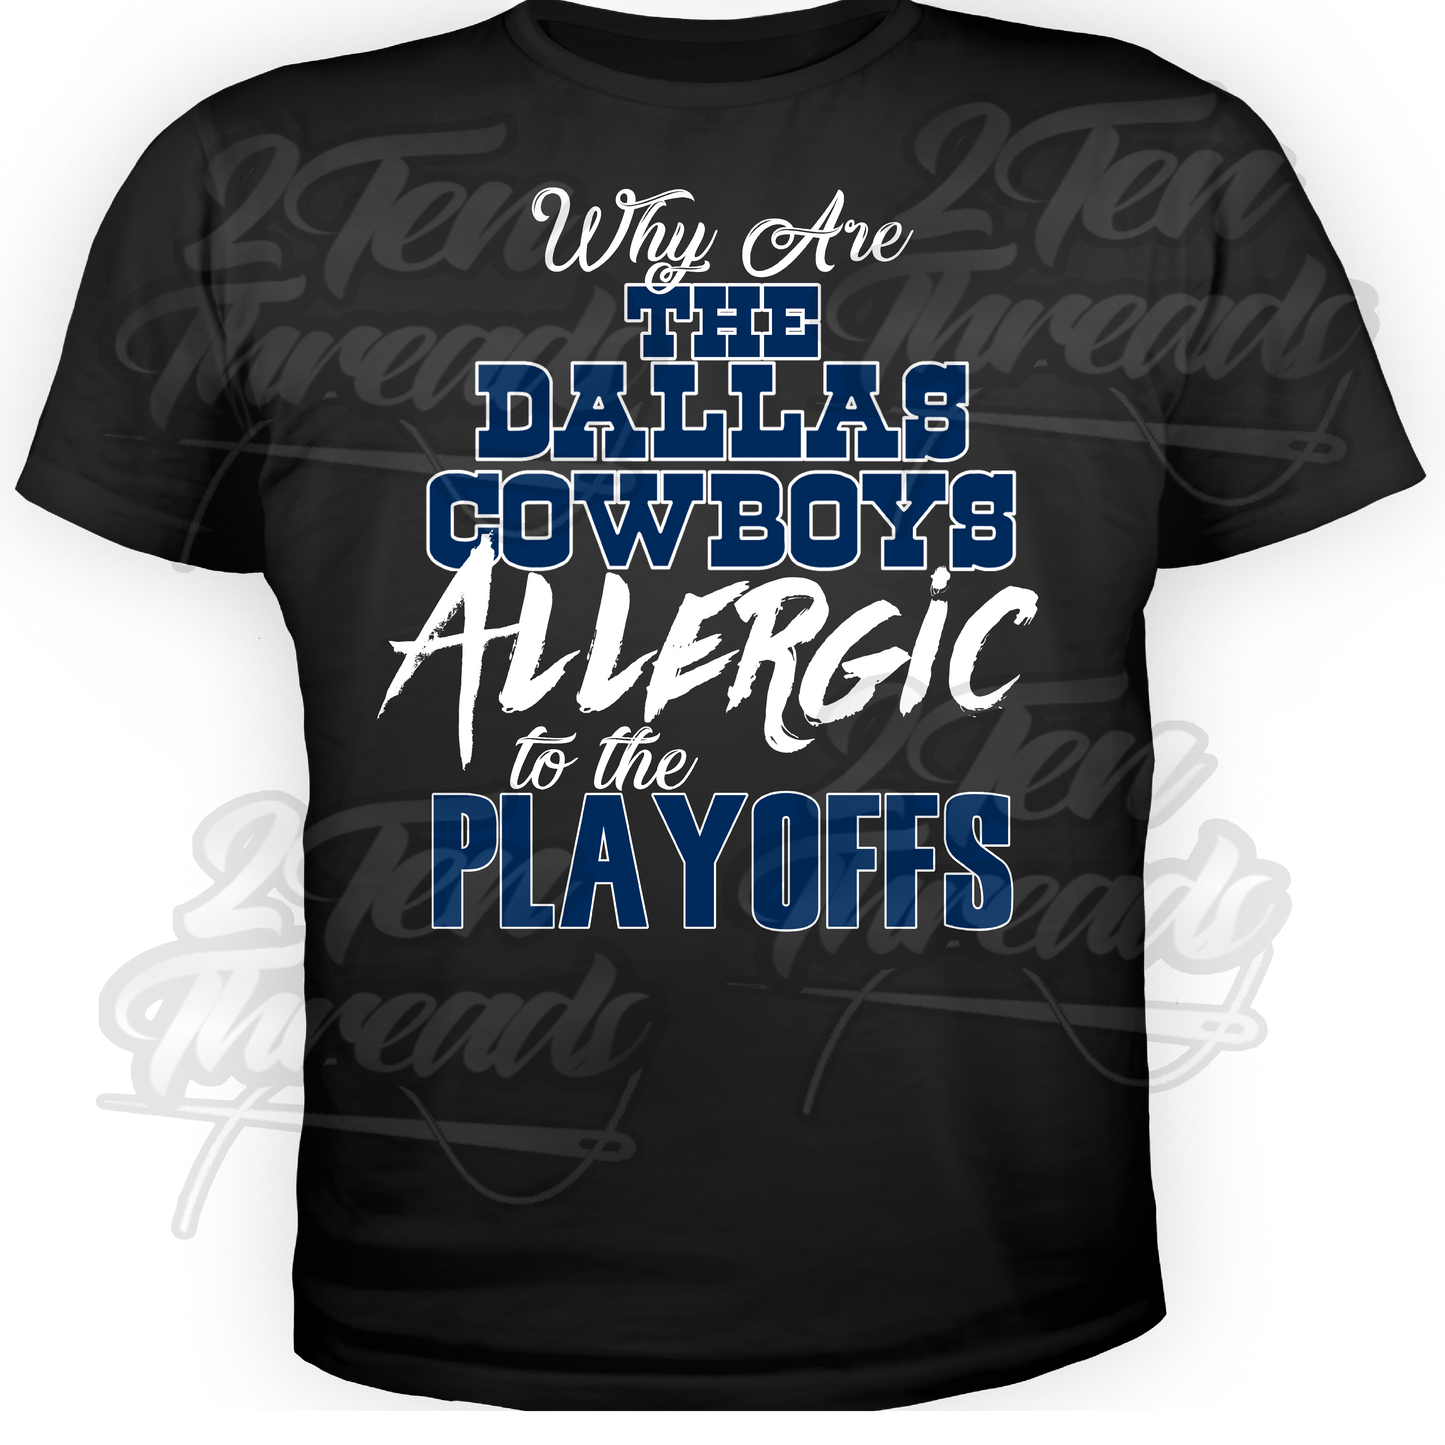 Cowboys allergic Playoffs Shirt